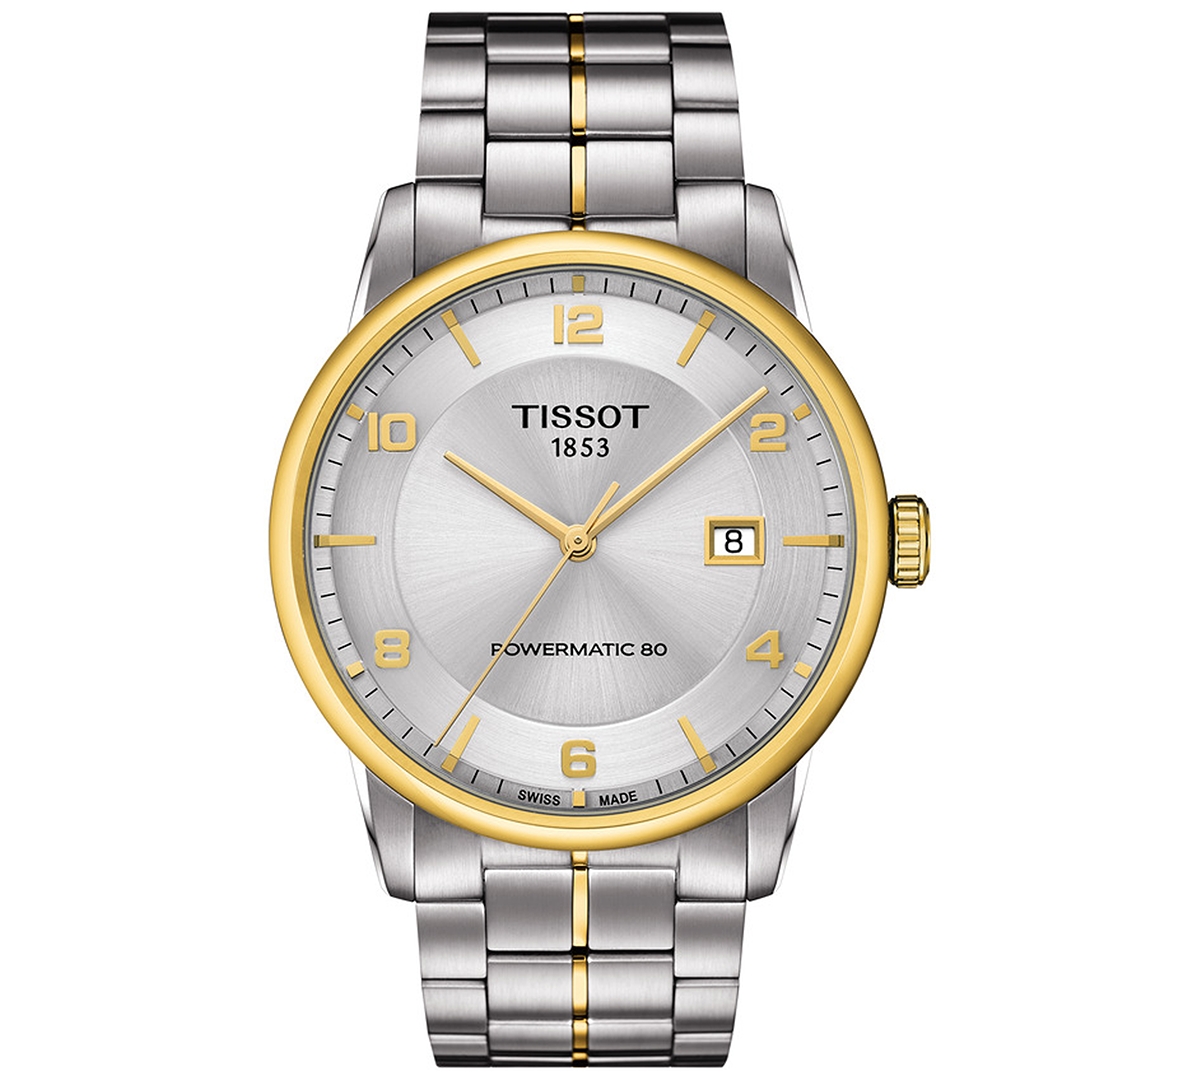 Tissot Men's Swiss Automatic Chemin Des Tourelles Powermatic 80 Two-tone Stainless Steel Bracelet Watch 42m In Silver